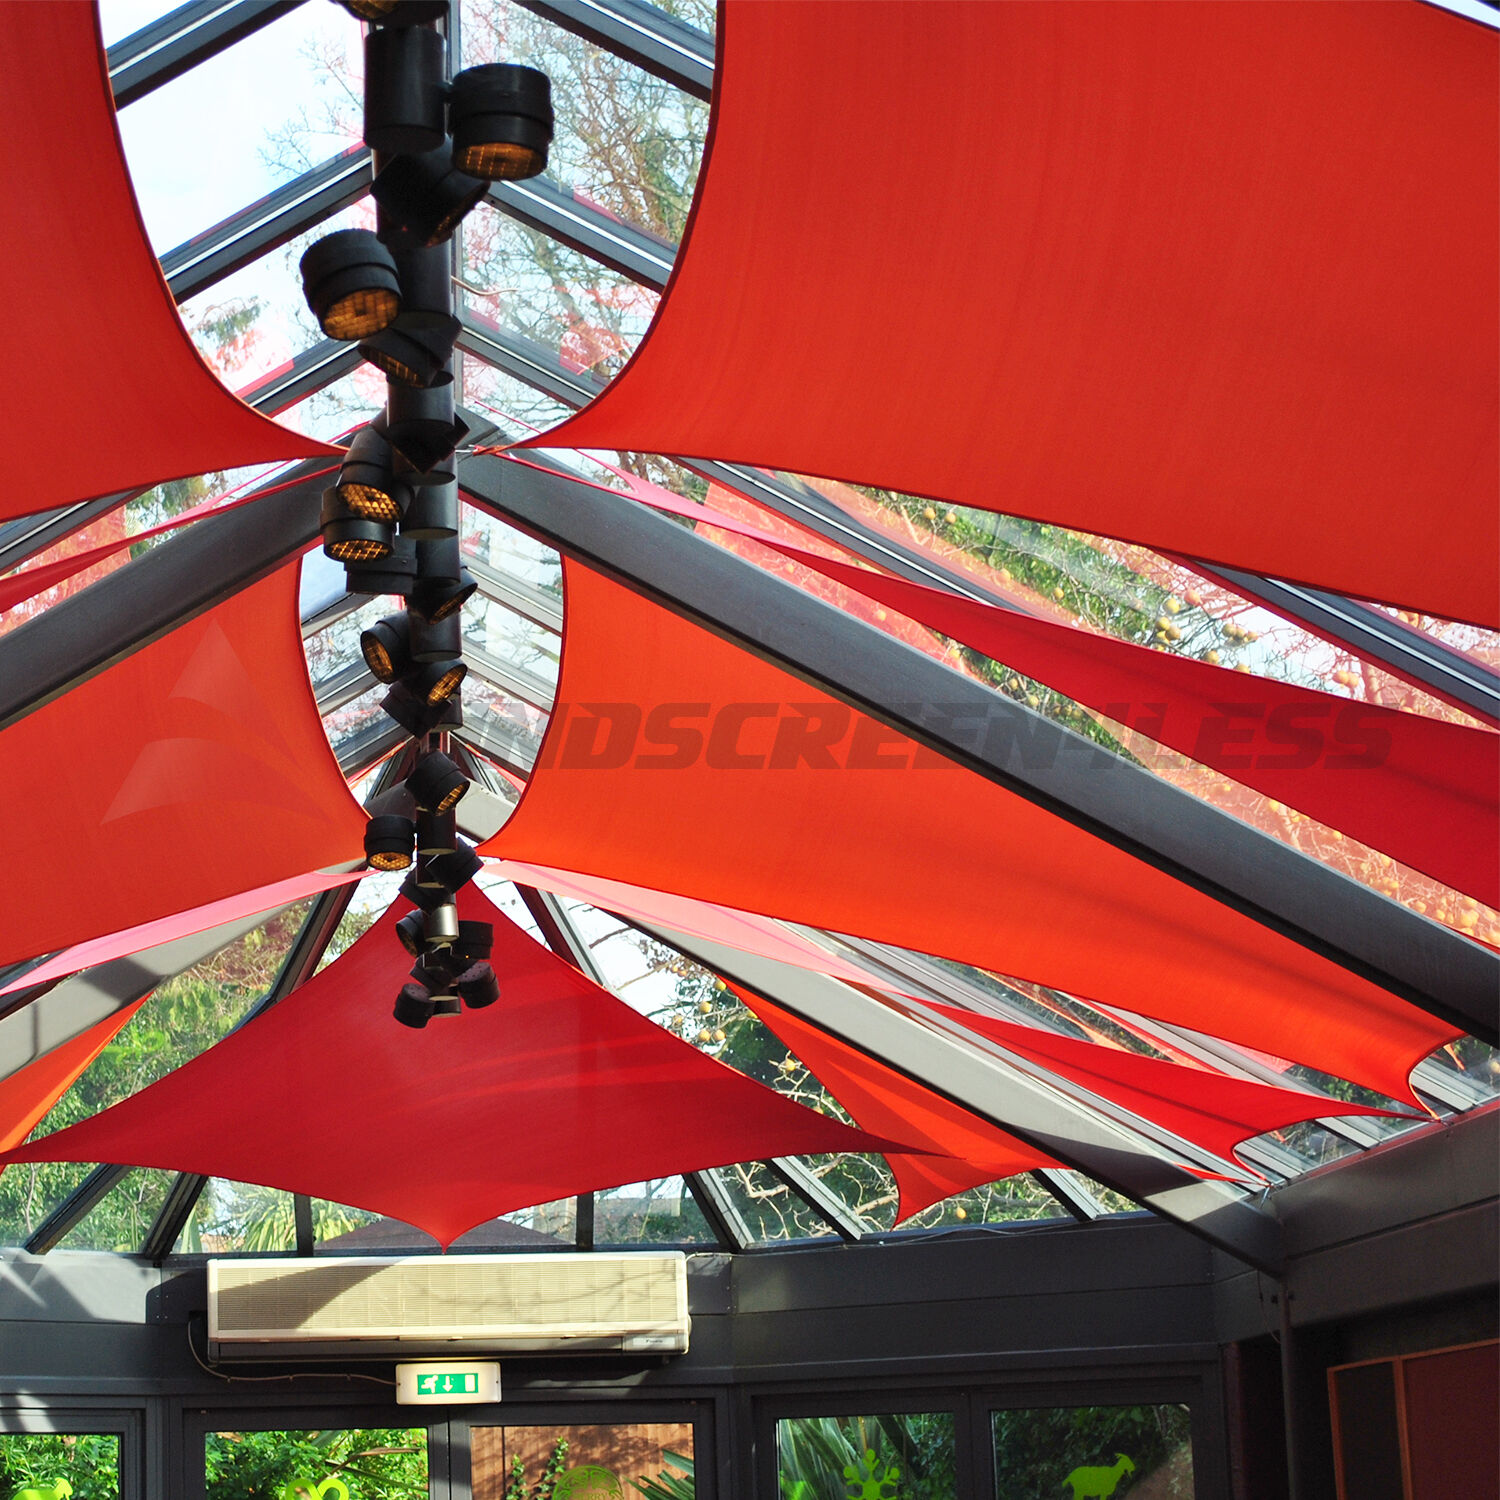 Waterproof Rectangle Sun Shade Sail Fabric Canopy Patio Awning 8'/10'/12'/16'